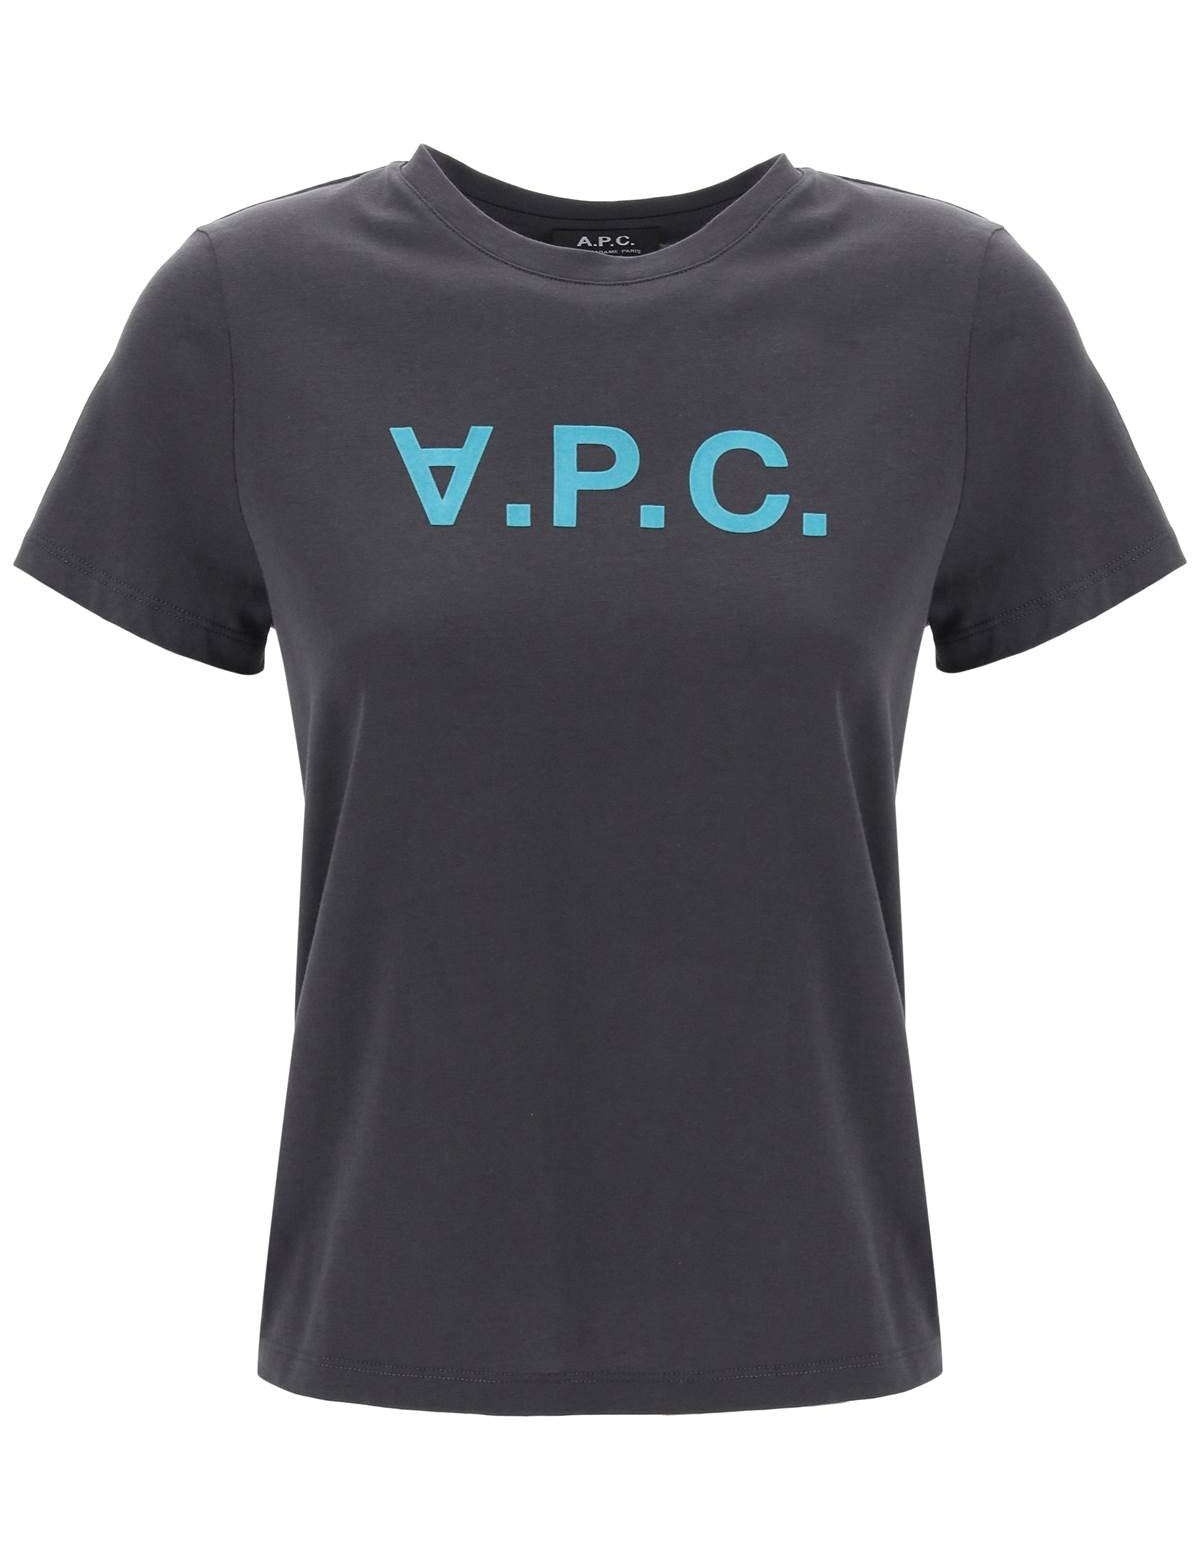 apc-t-shirt-with-flocked-vpc-logo_5f48c247-5328-4913-91cc-3638012b8009.jpg